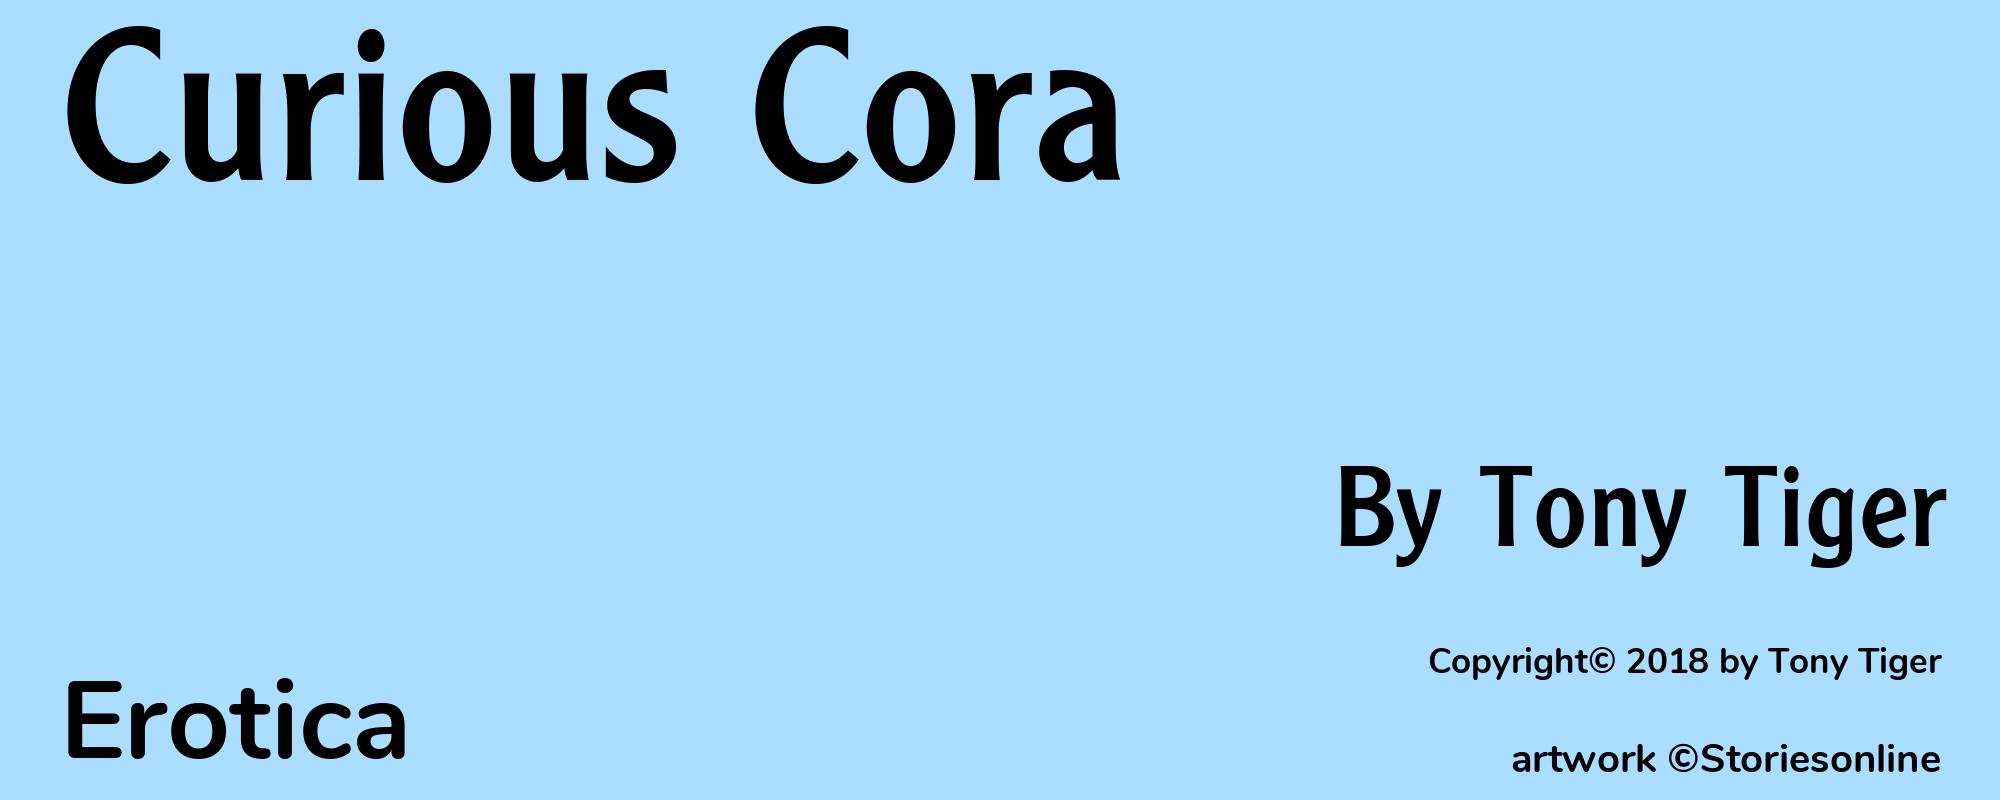 Curious Cora - Cover